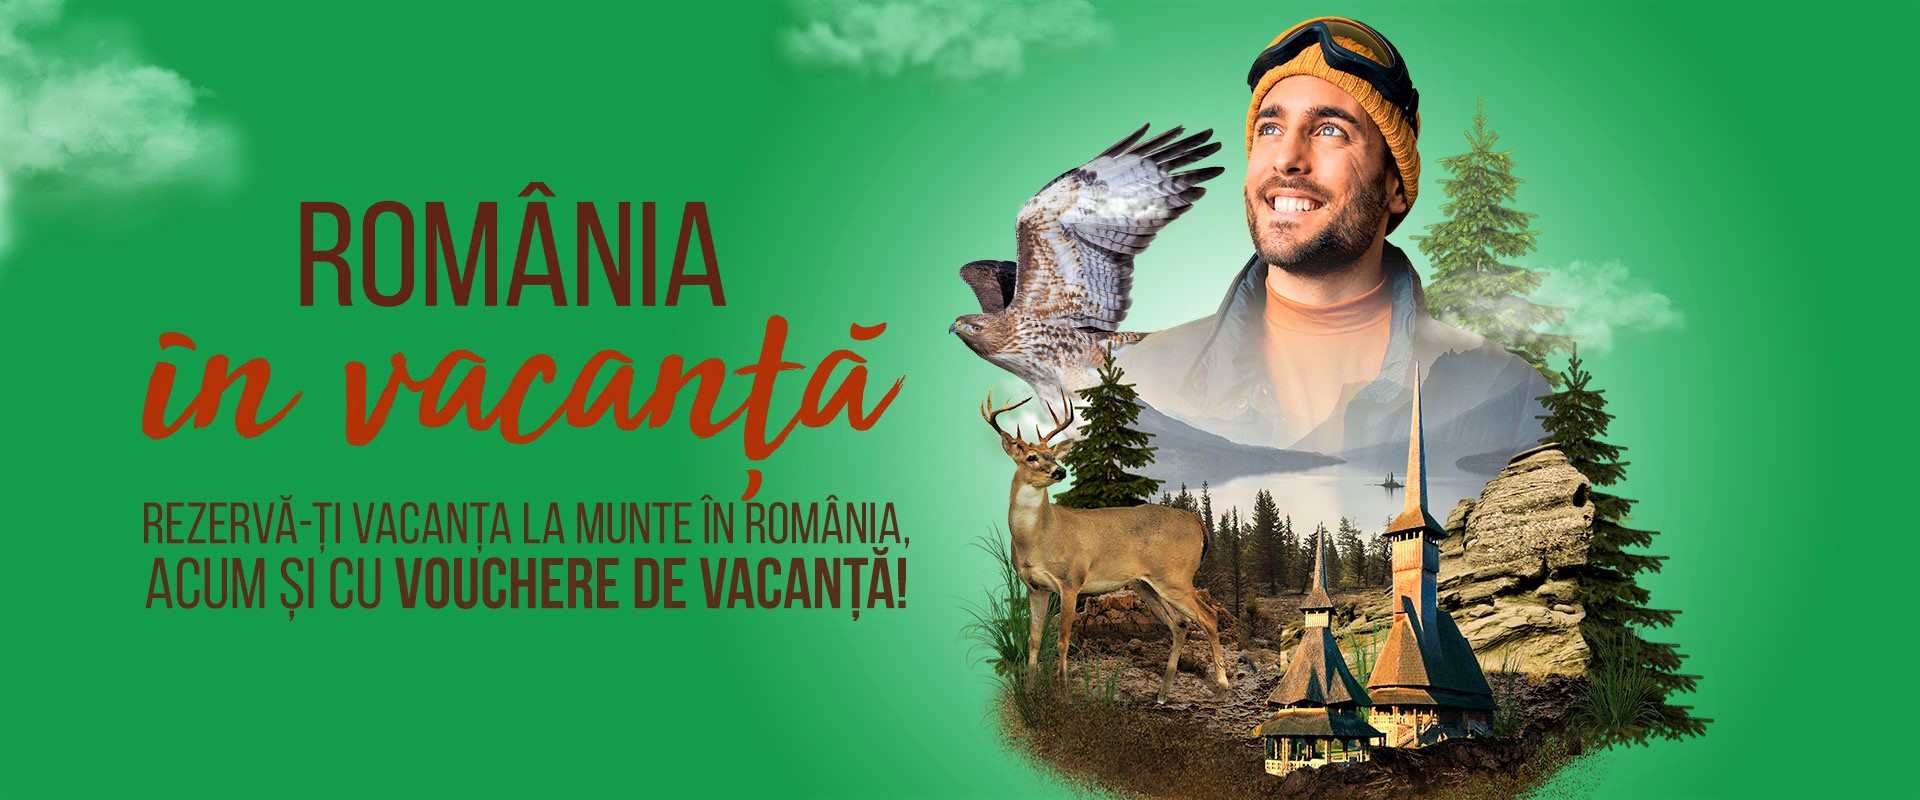 Romania in vacanta - Munte